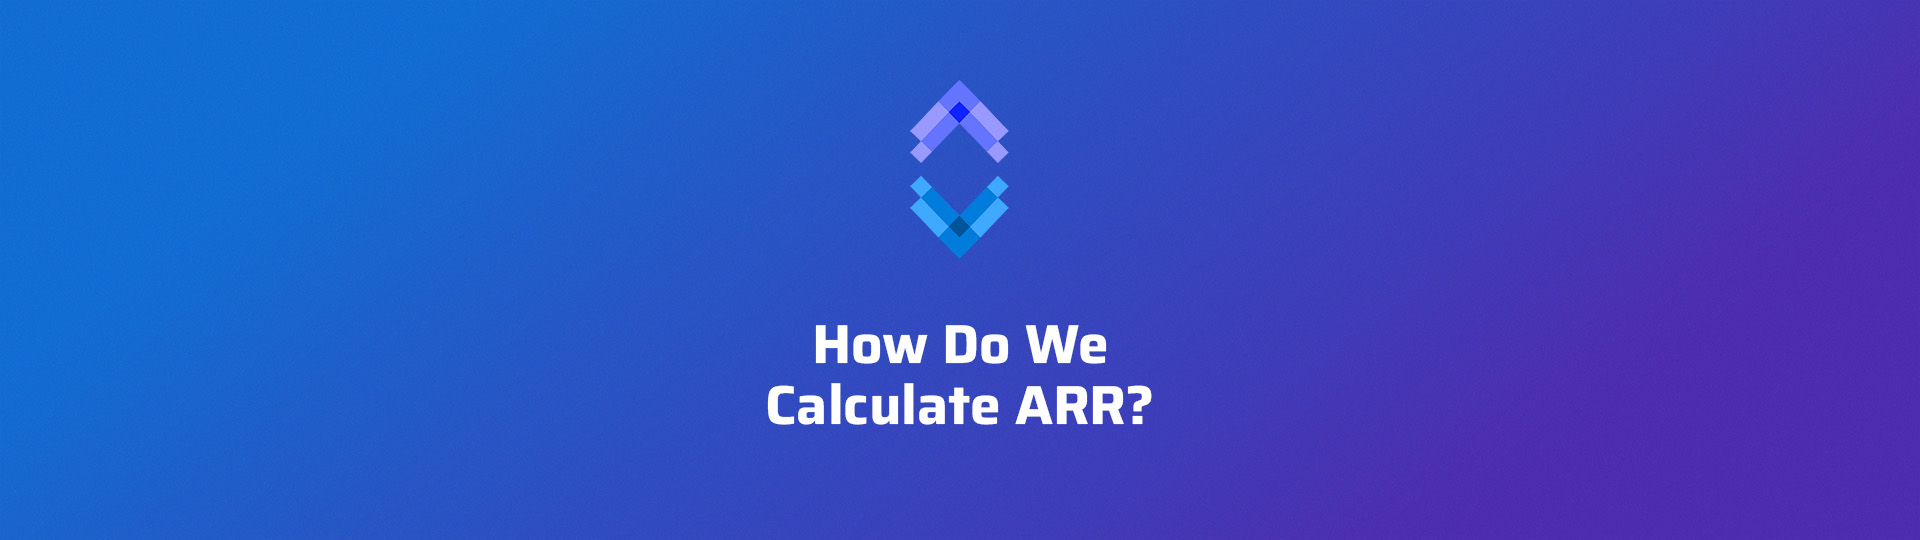 How Do We Calculate ARR